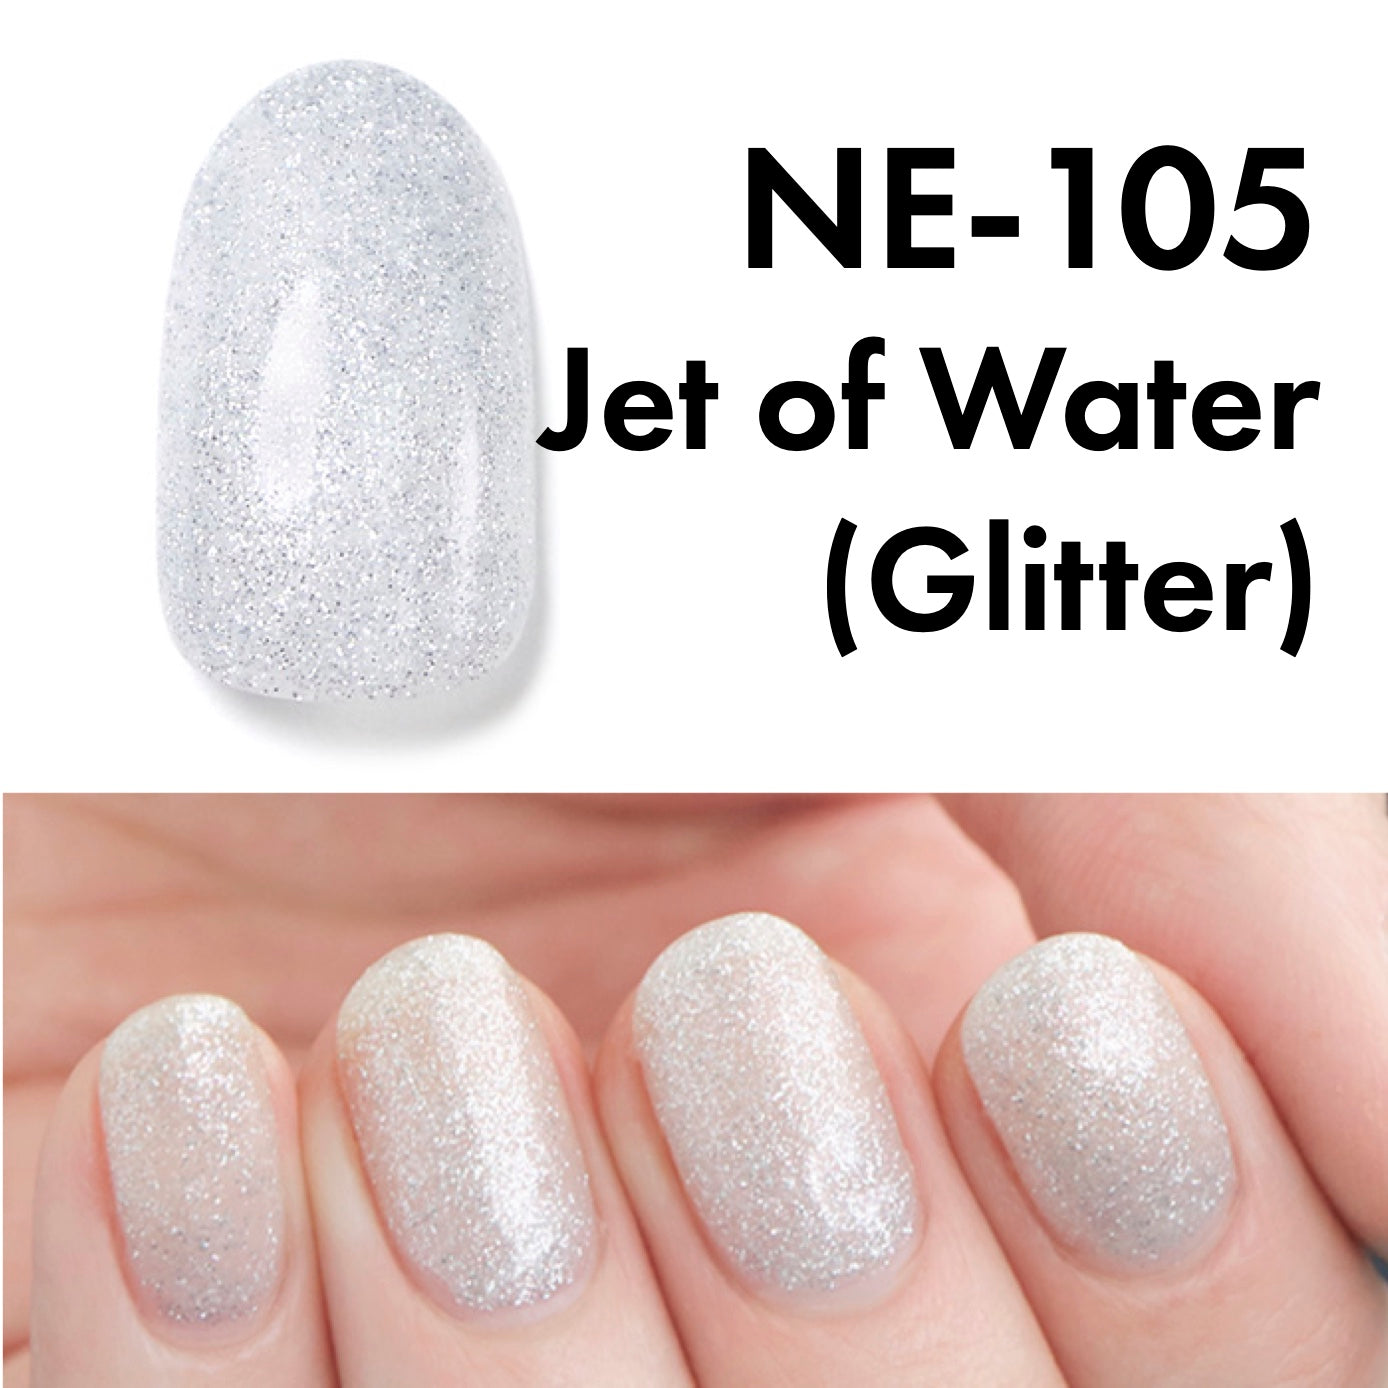 White and White Glitter Gel Nails | Sparkle gel nails, Glitter gel nails, Gel  nails